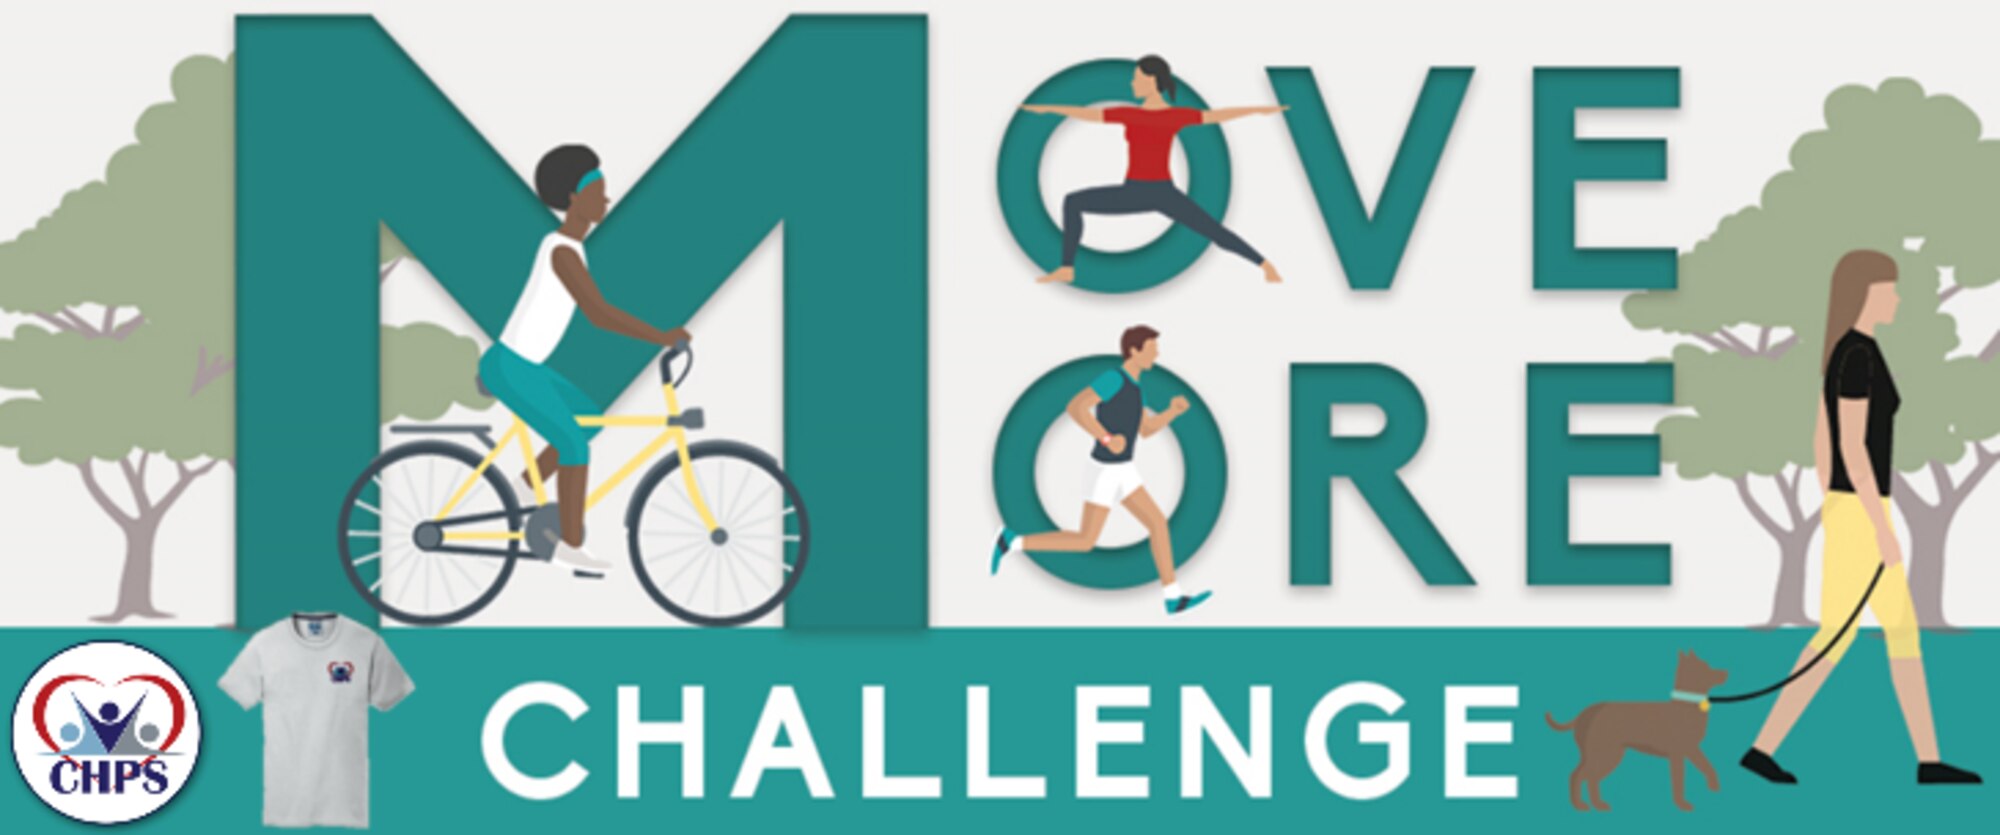 Move More Challenge Graphic